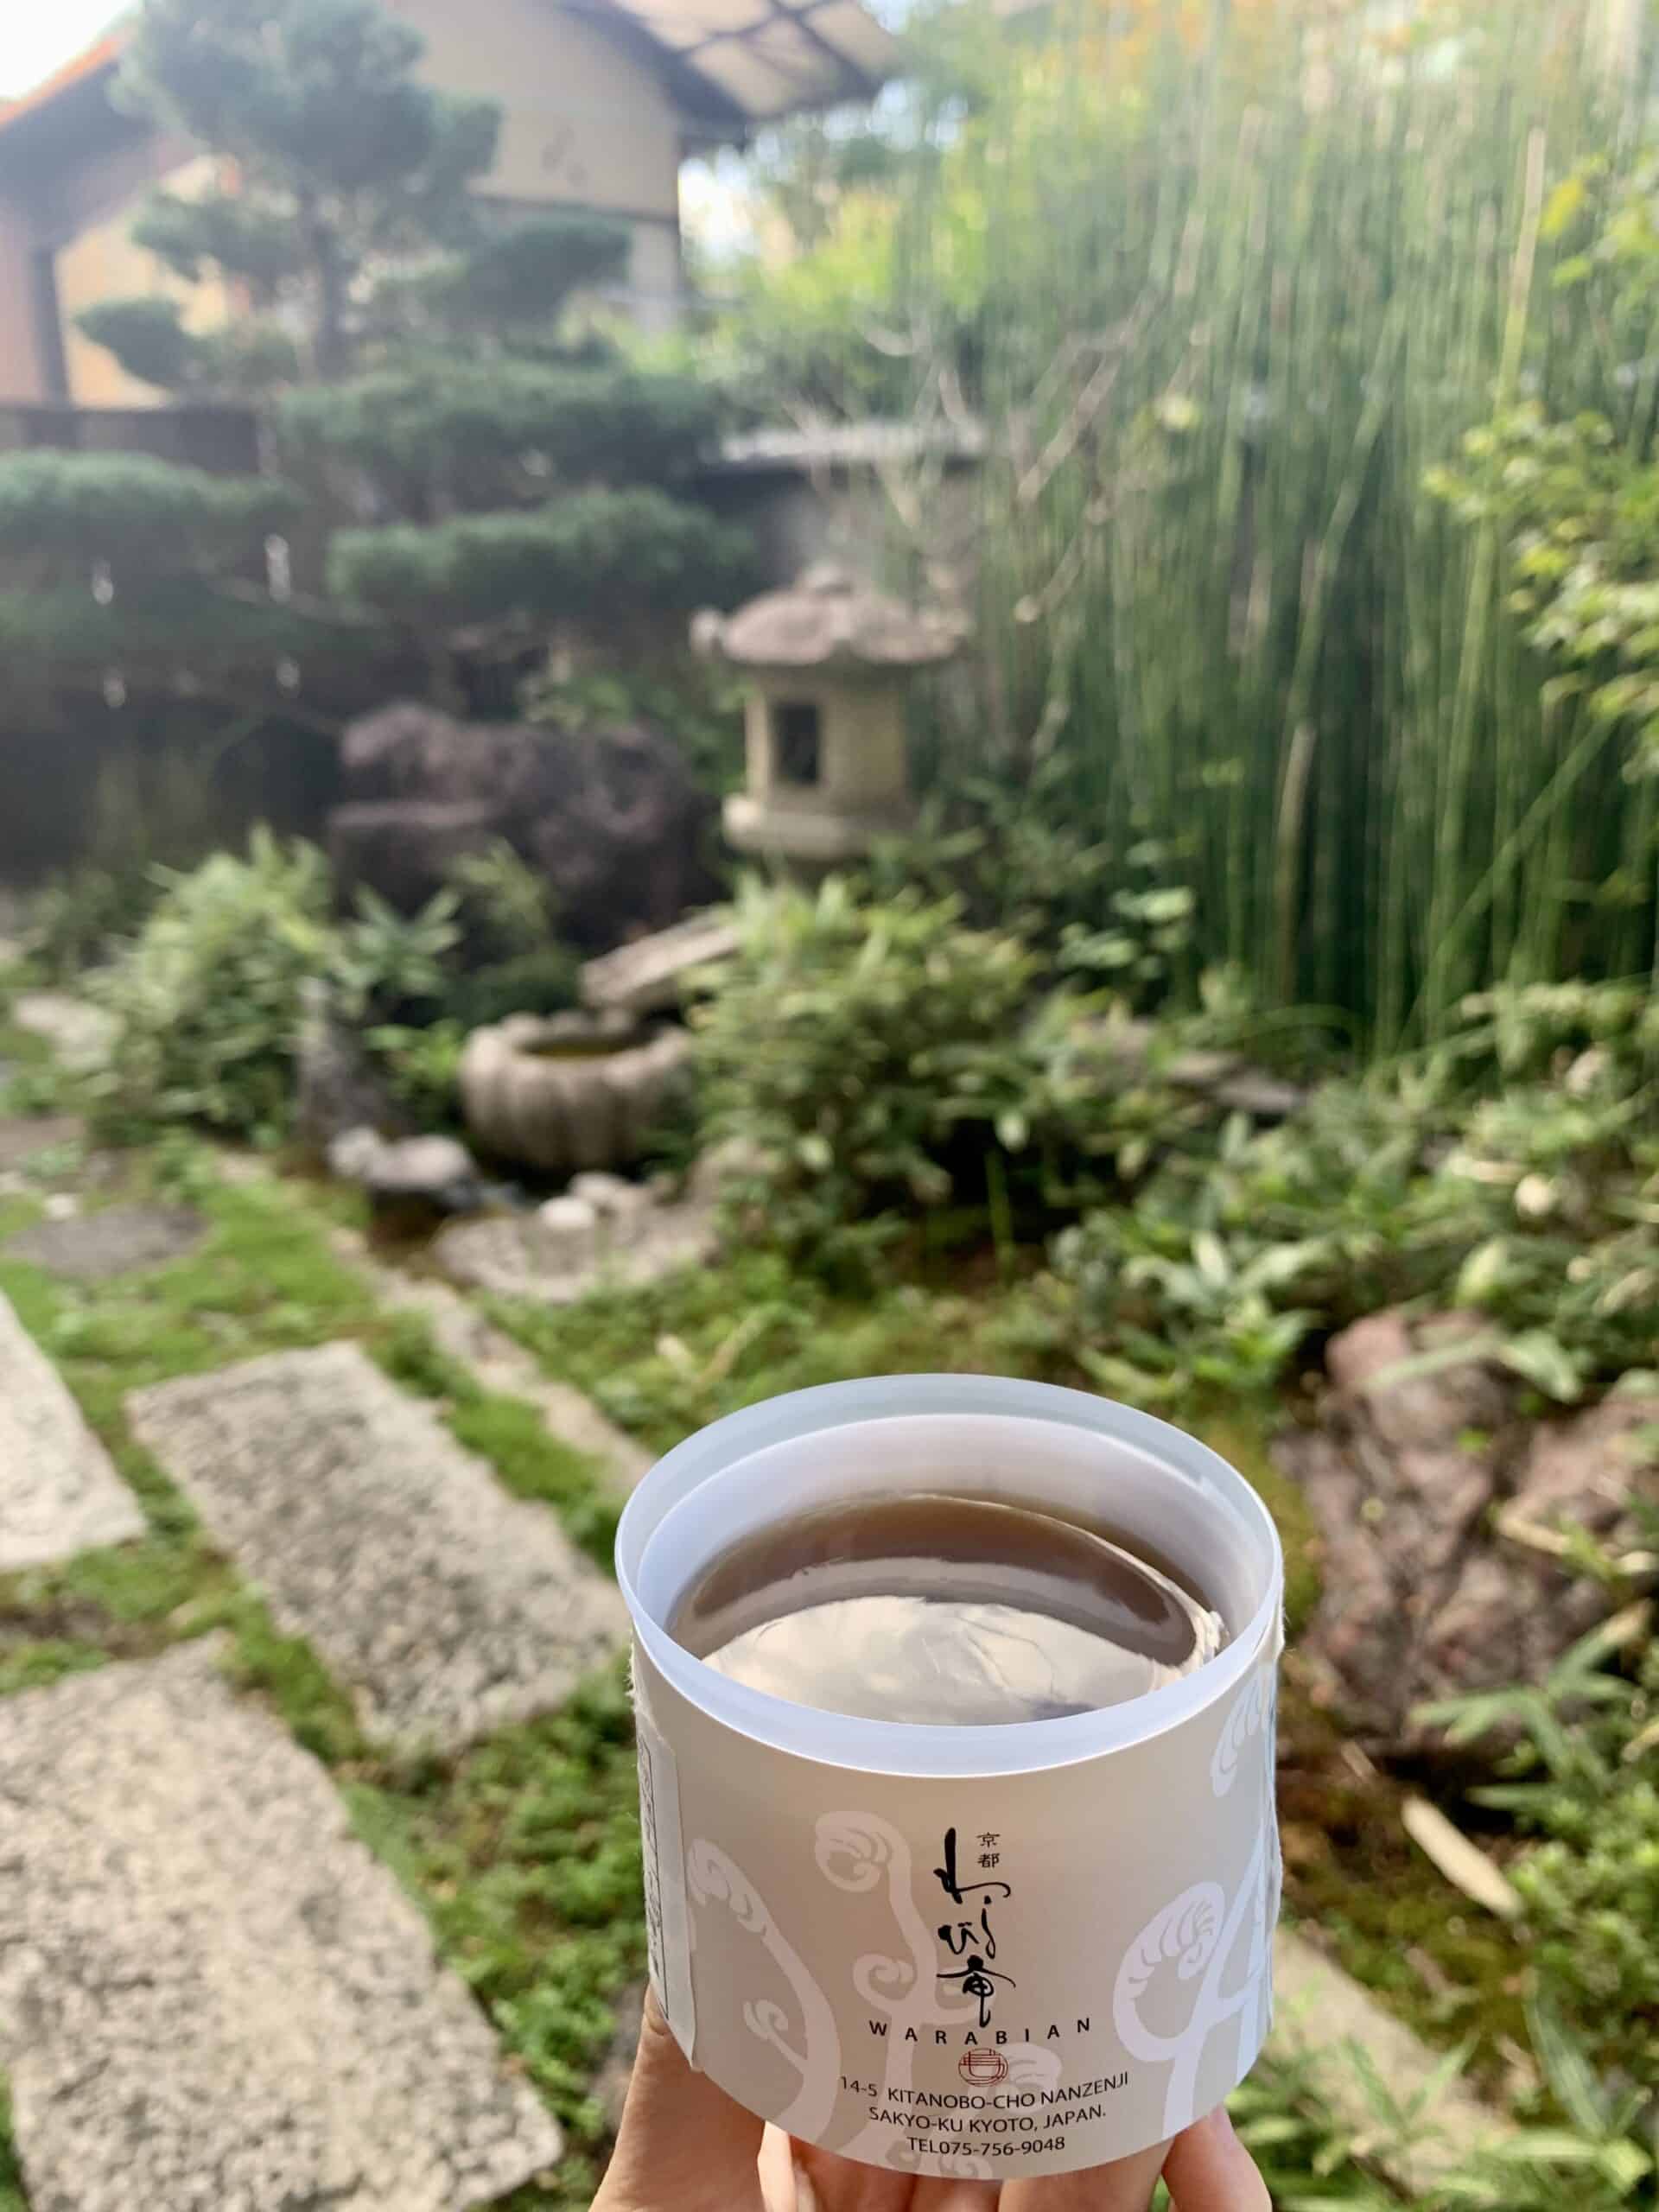 Warabian warabi mochi in a cup